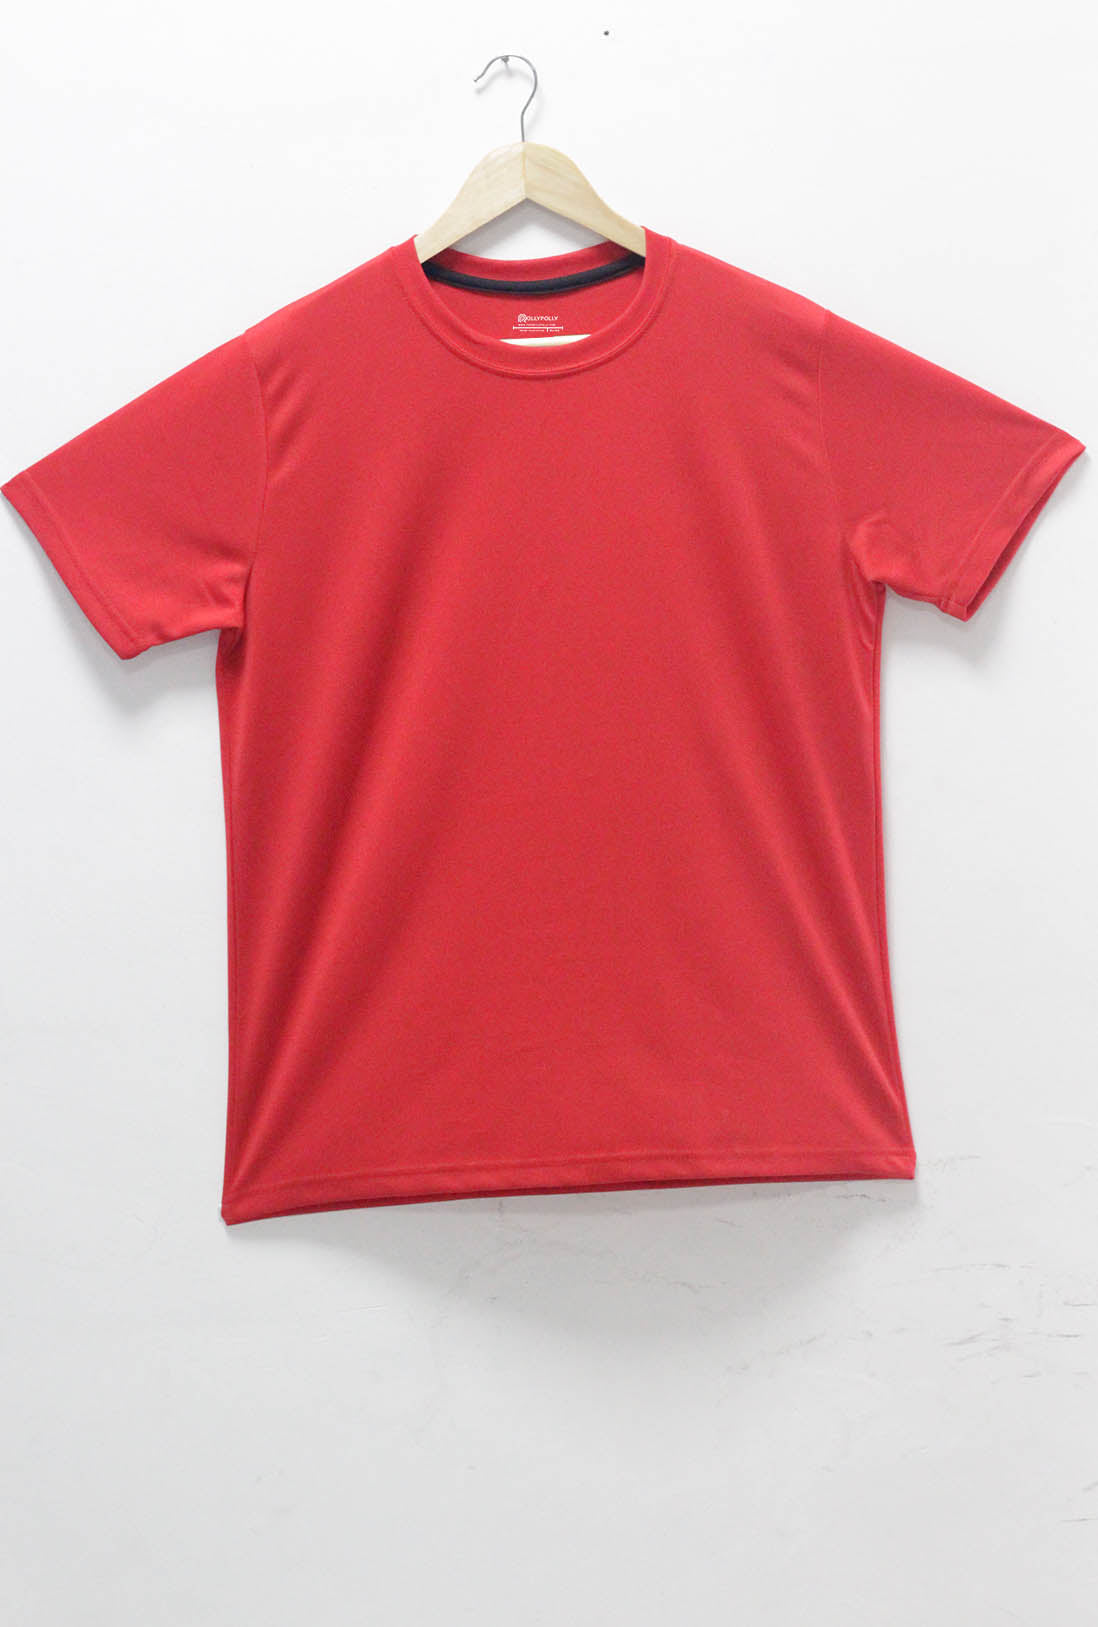 Men's Scarlet Red Active Wear T-Shirt